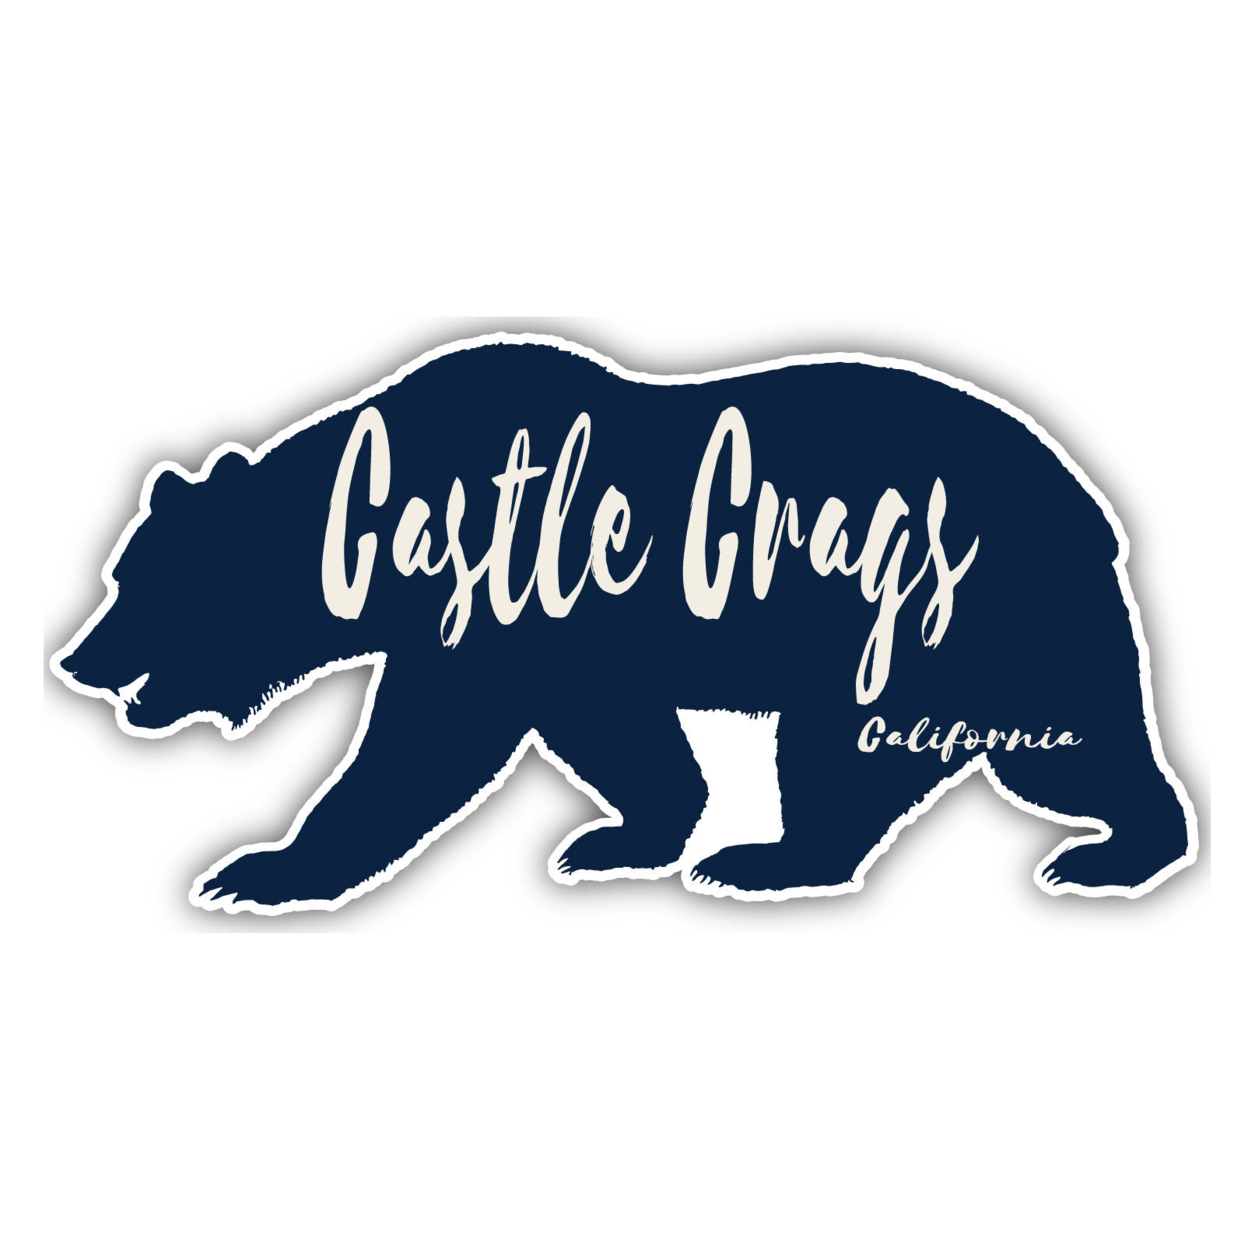 Castle Crags California Souvenir Decorative Stickers (Choose Theme And Size) - Single Unit, 10-Inch, Bear